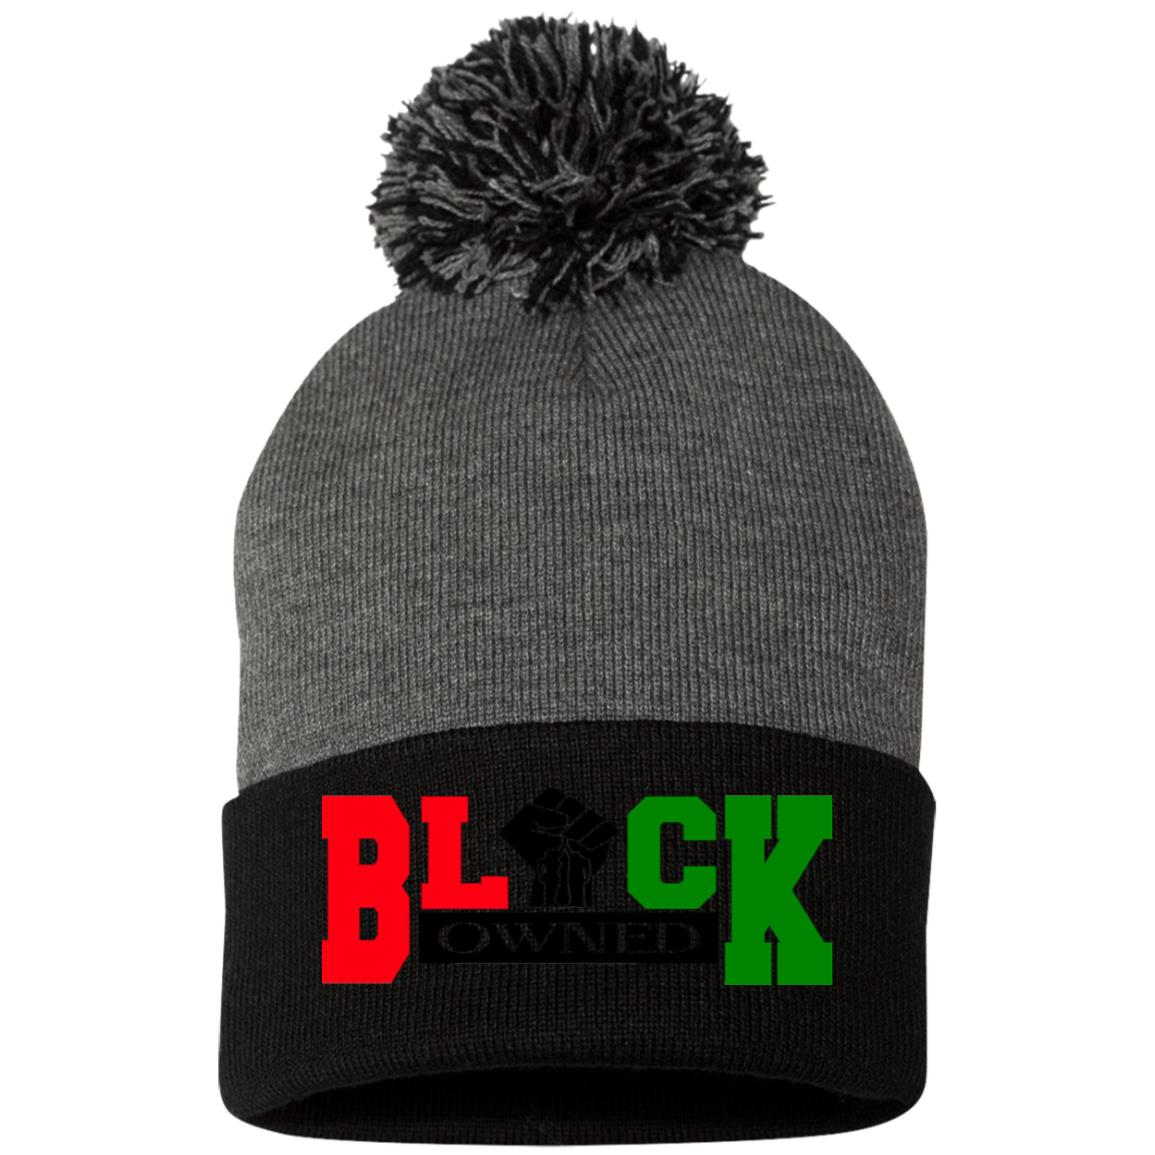 BLACK OWNED RBG Pom Pom Knit Cap